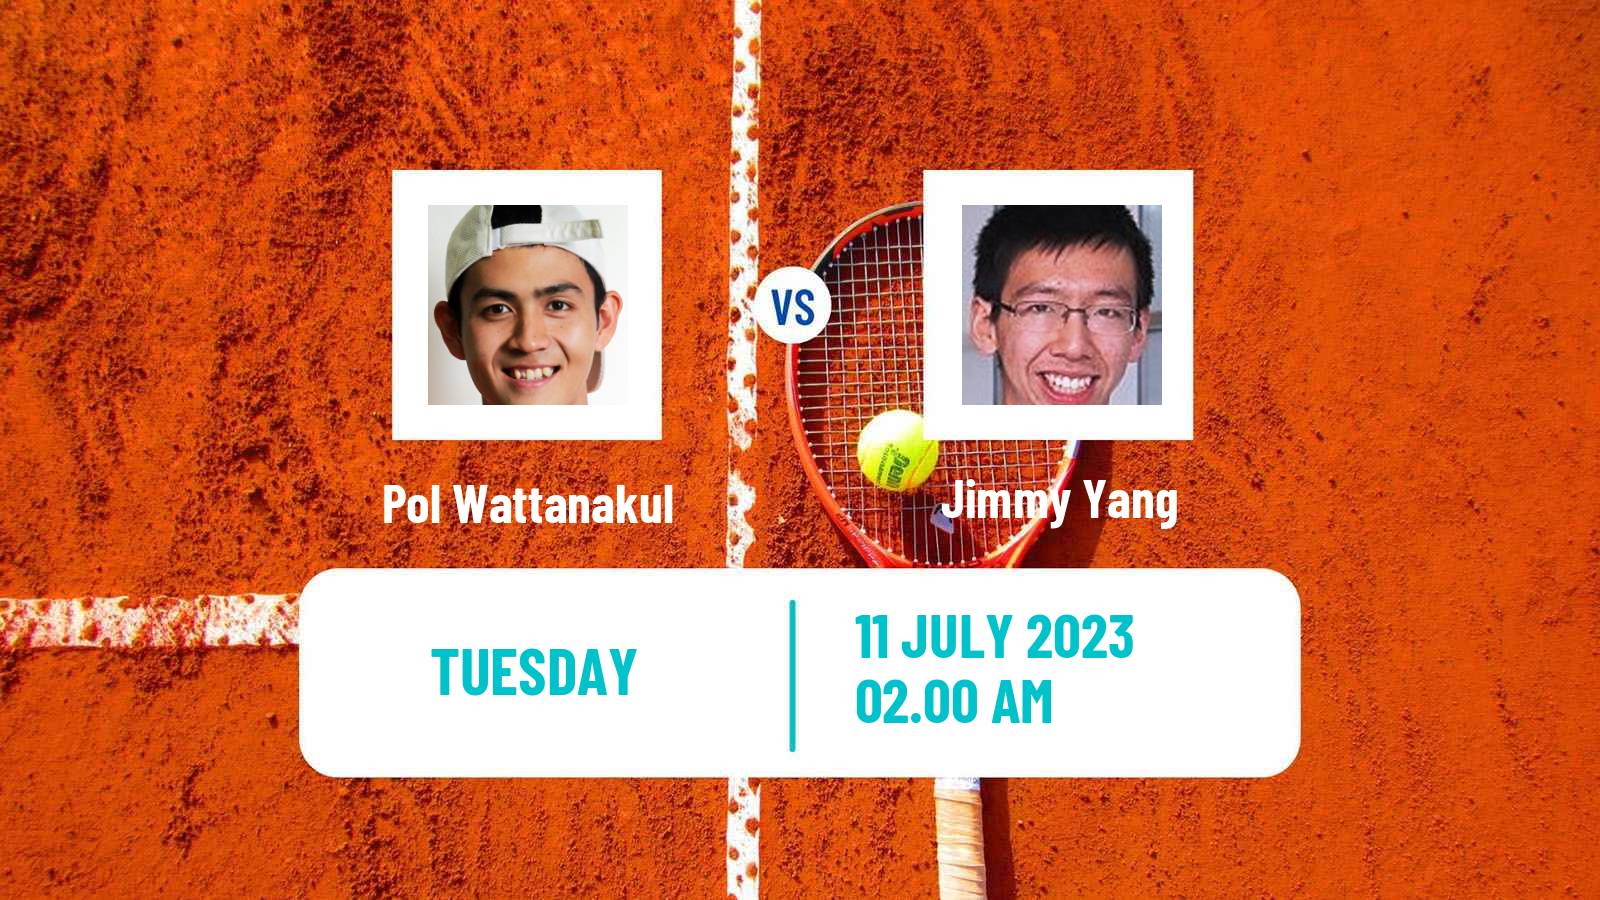 Tennis ITF M15 Shanghai Men Pol Wattanakul - Jimmy Yang